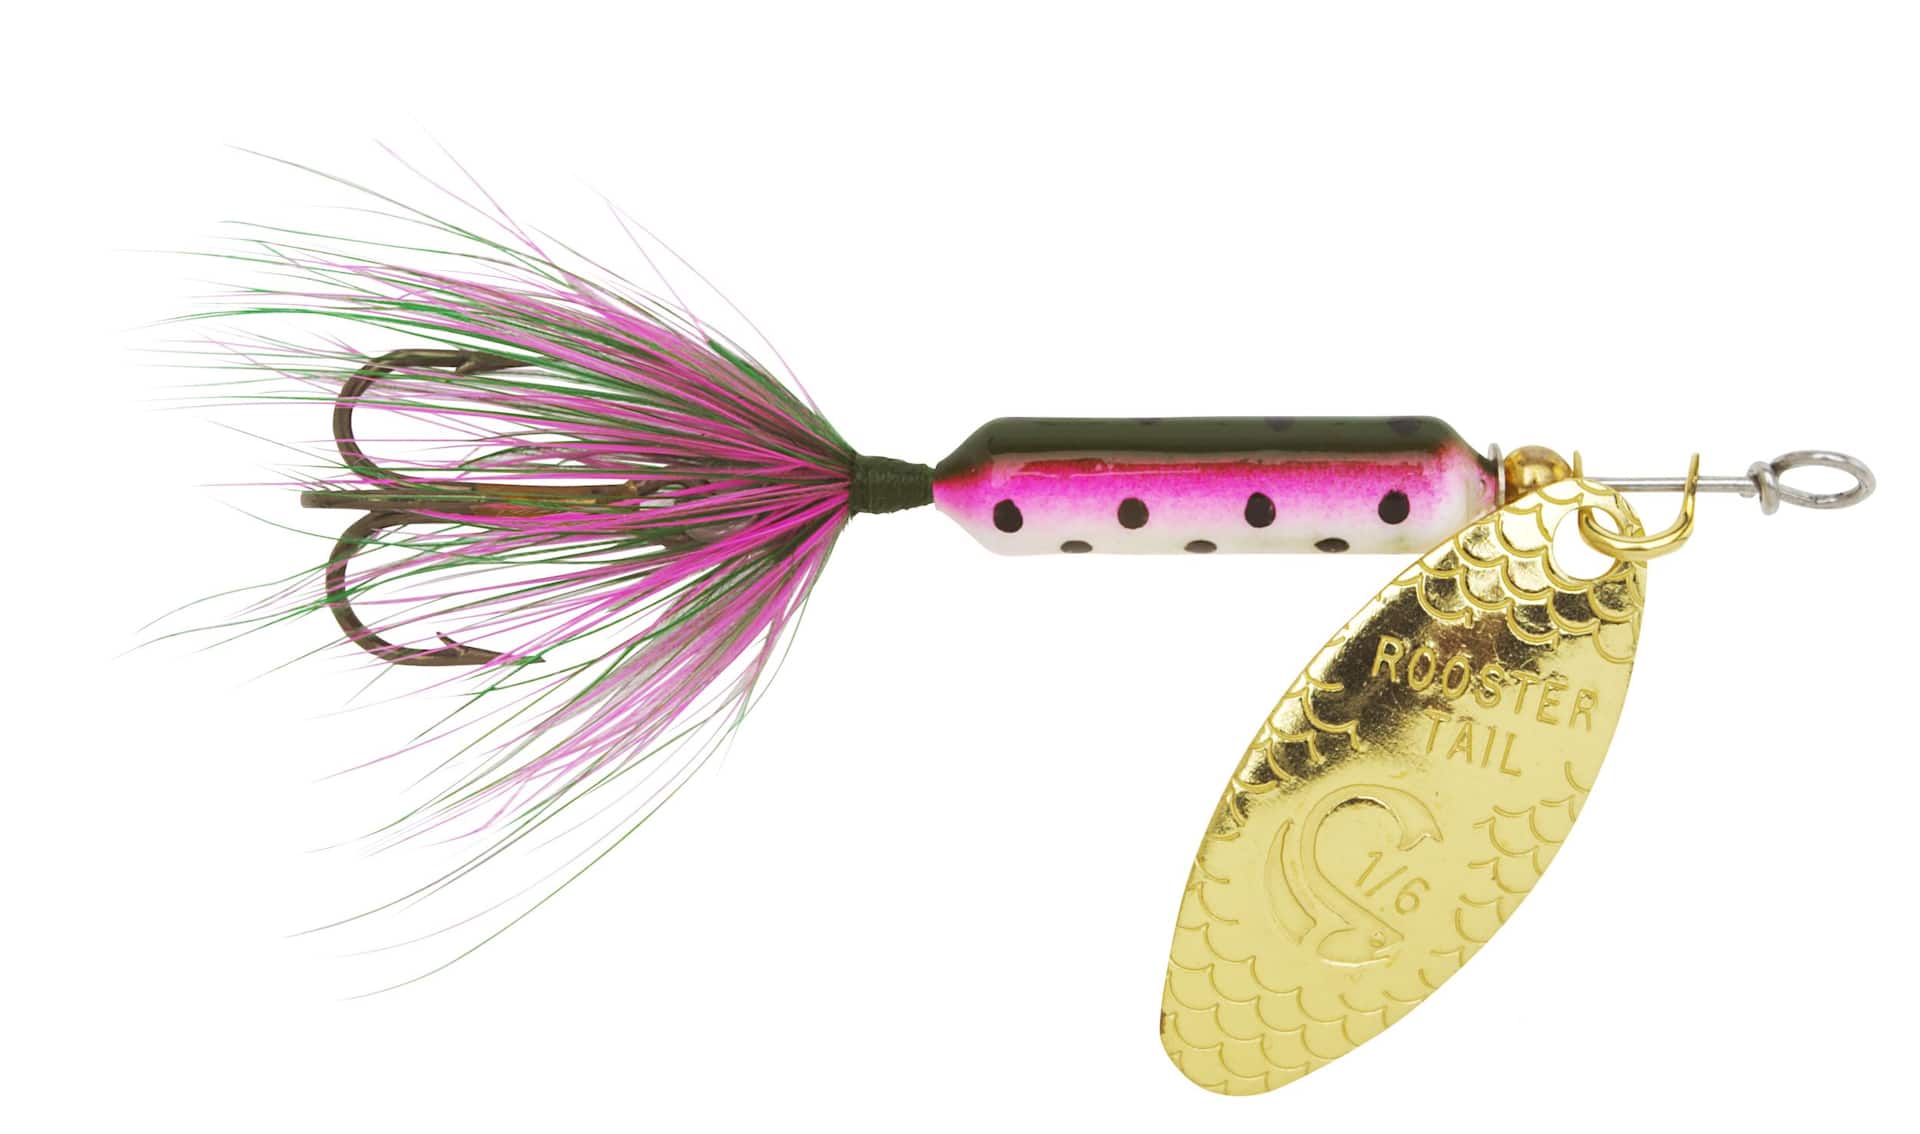 Mepps Musky Killer Inline Trout Fishing Spinner, 1/6 Oz Red/White